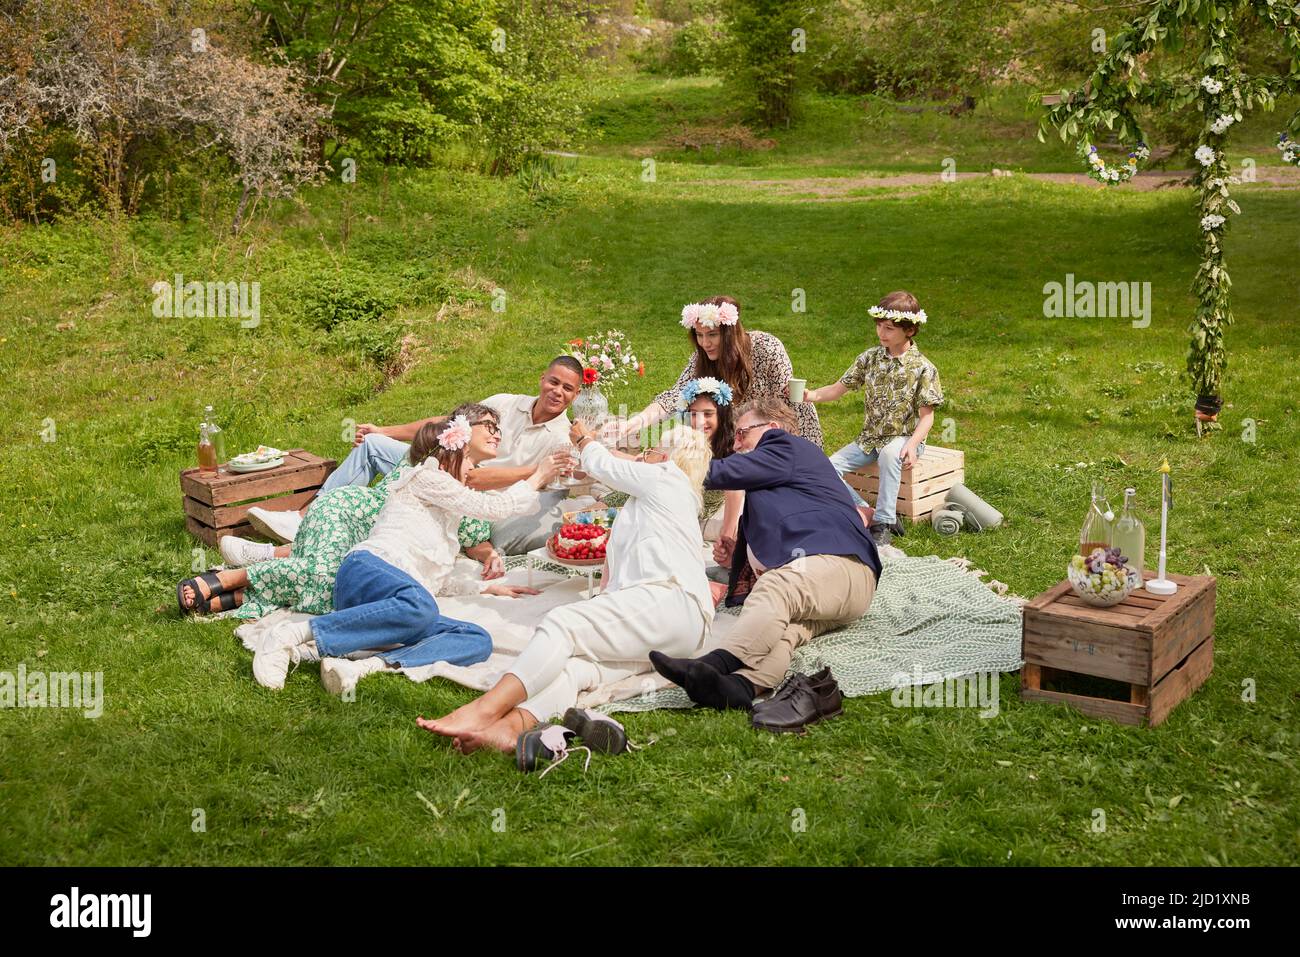 Family having picnic on grass Stock Photo